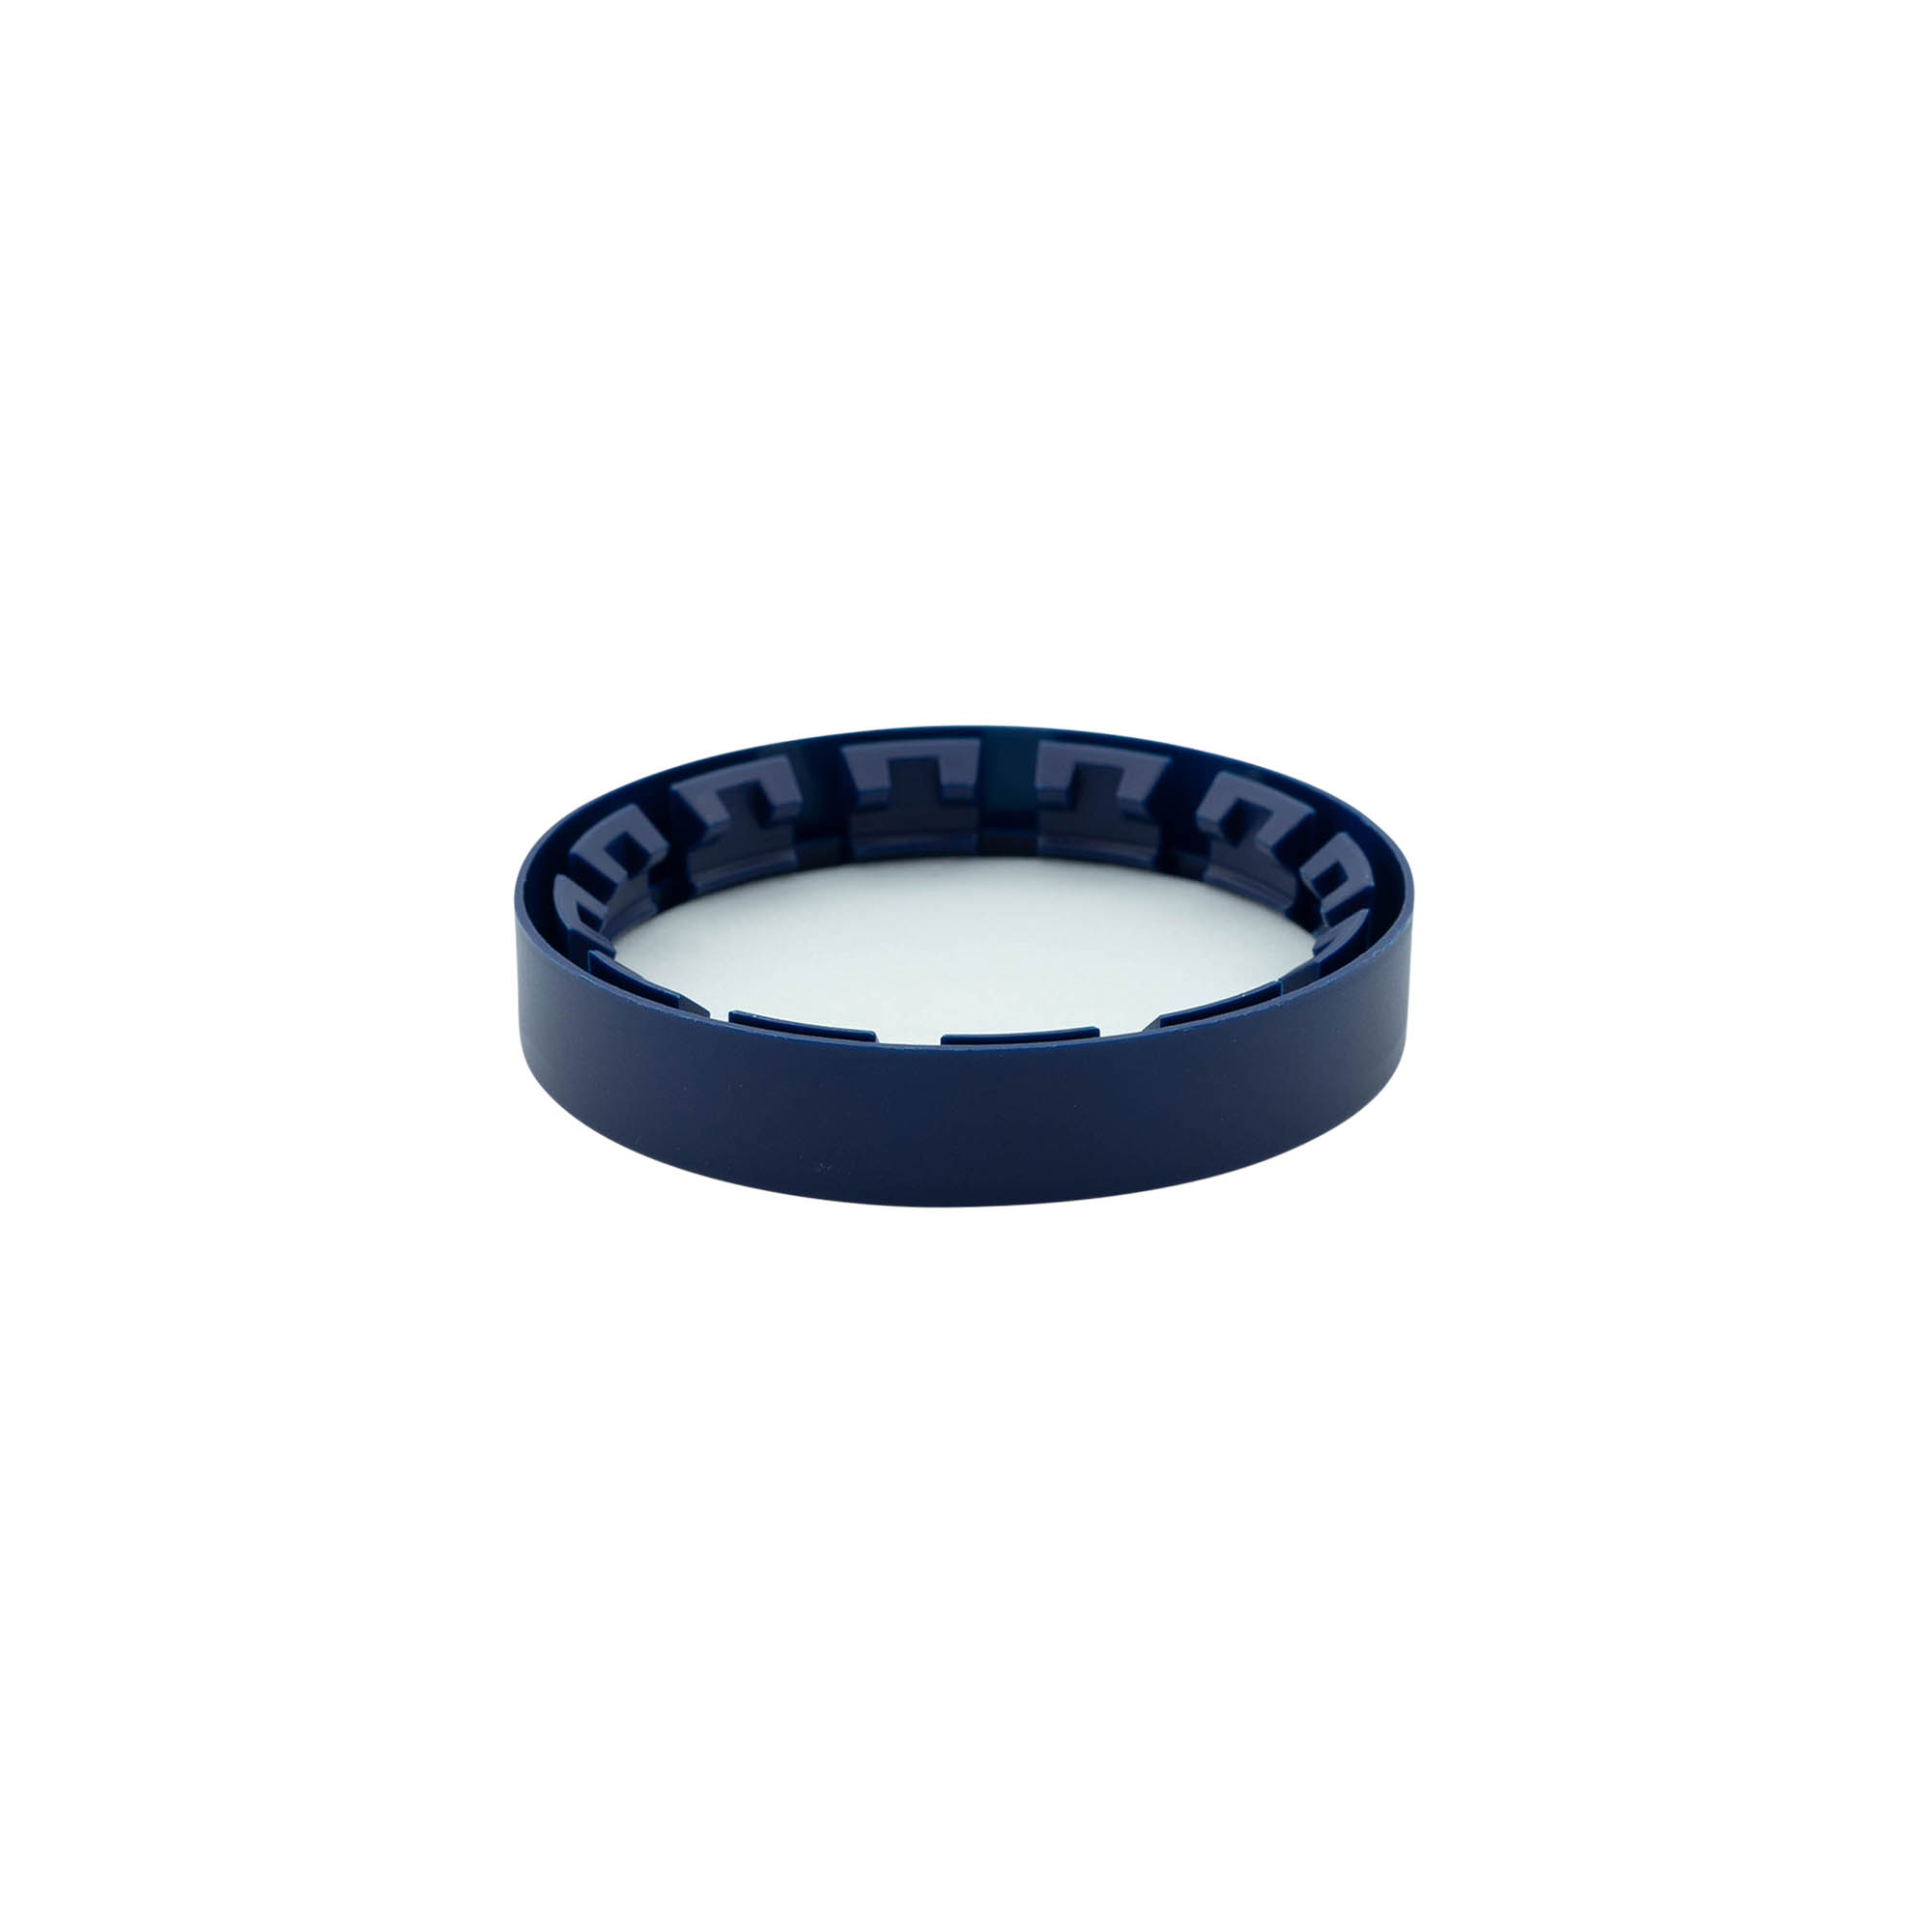 Slip lid for standard ceramic pot, HDPE plastic, blue